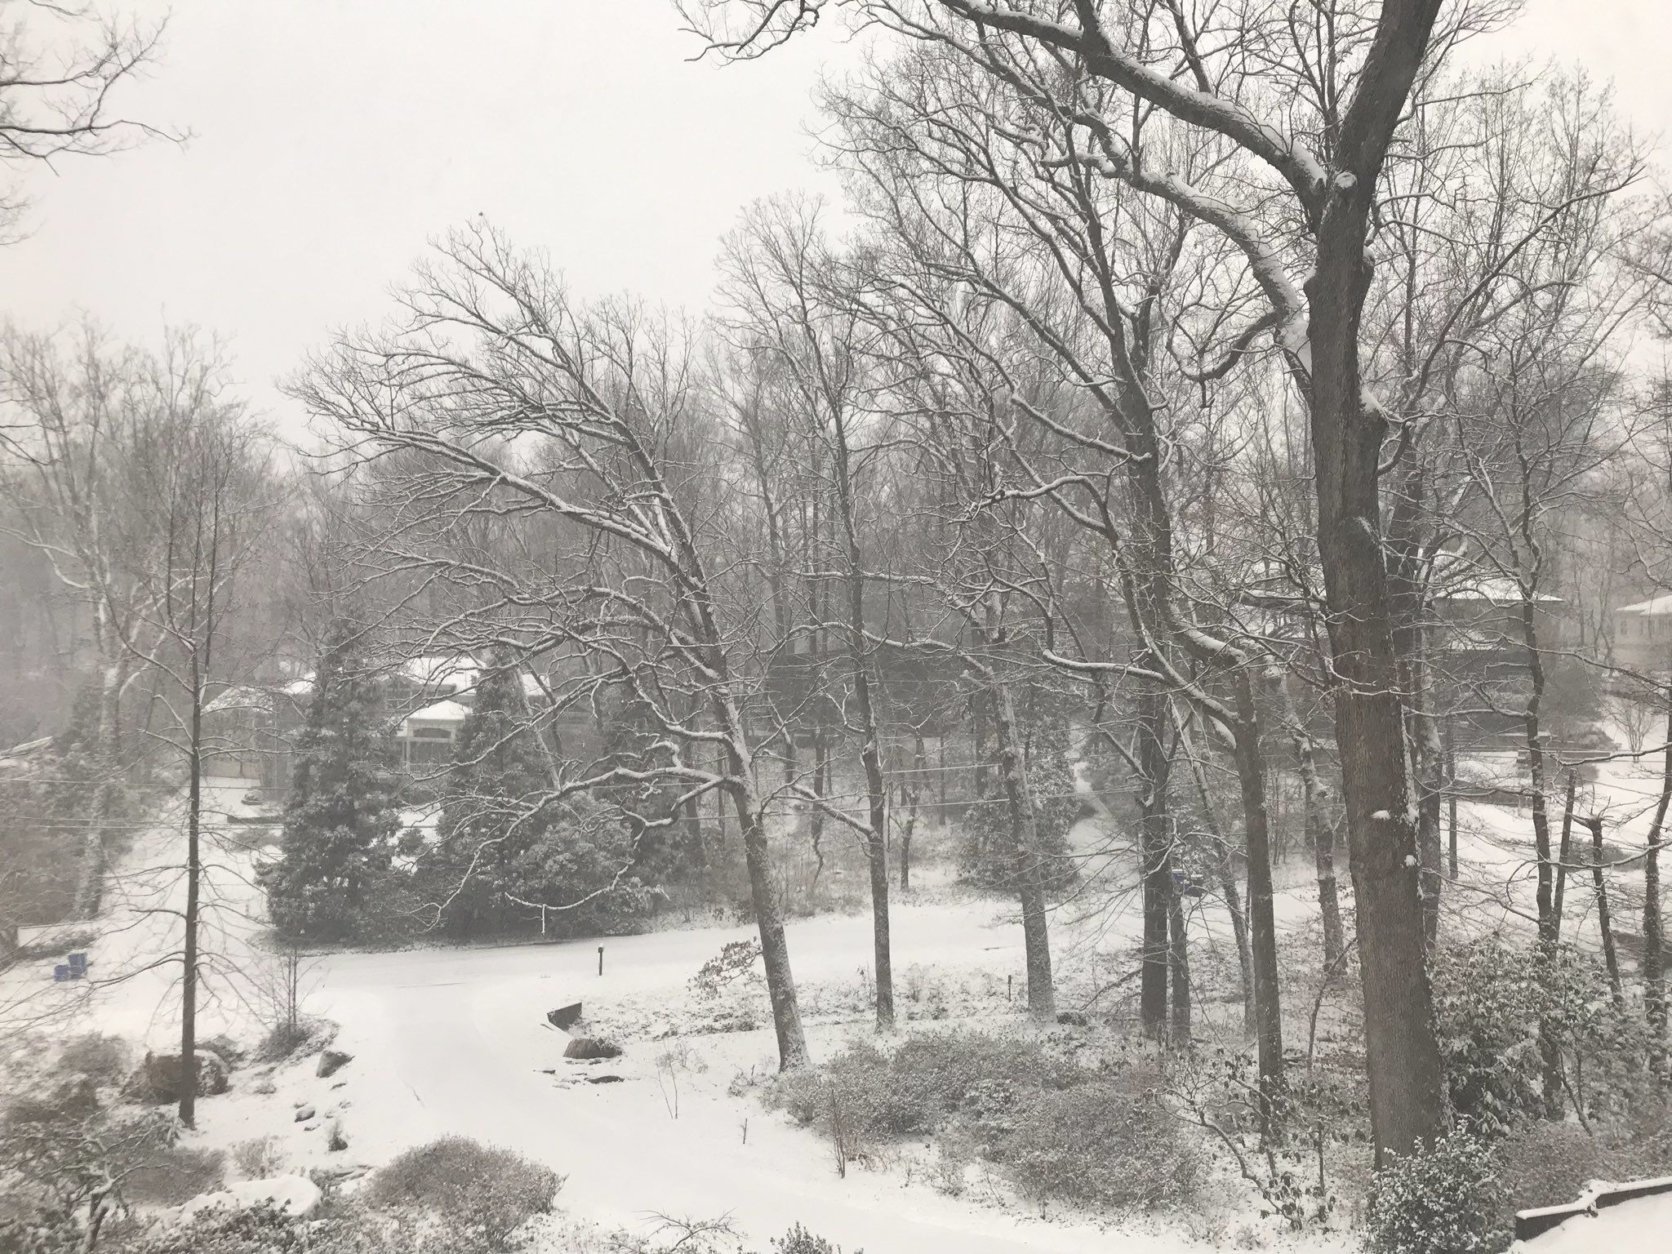 Bethesda, Maryland, got a heavy dose of snow Wednesday morning. (Courtesy @JohnKonkus via Twitter)
